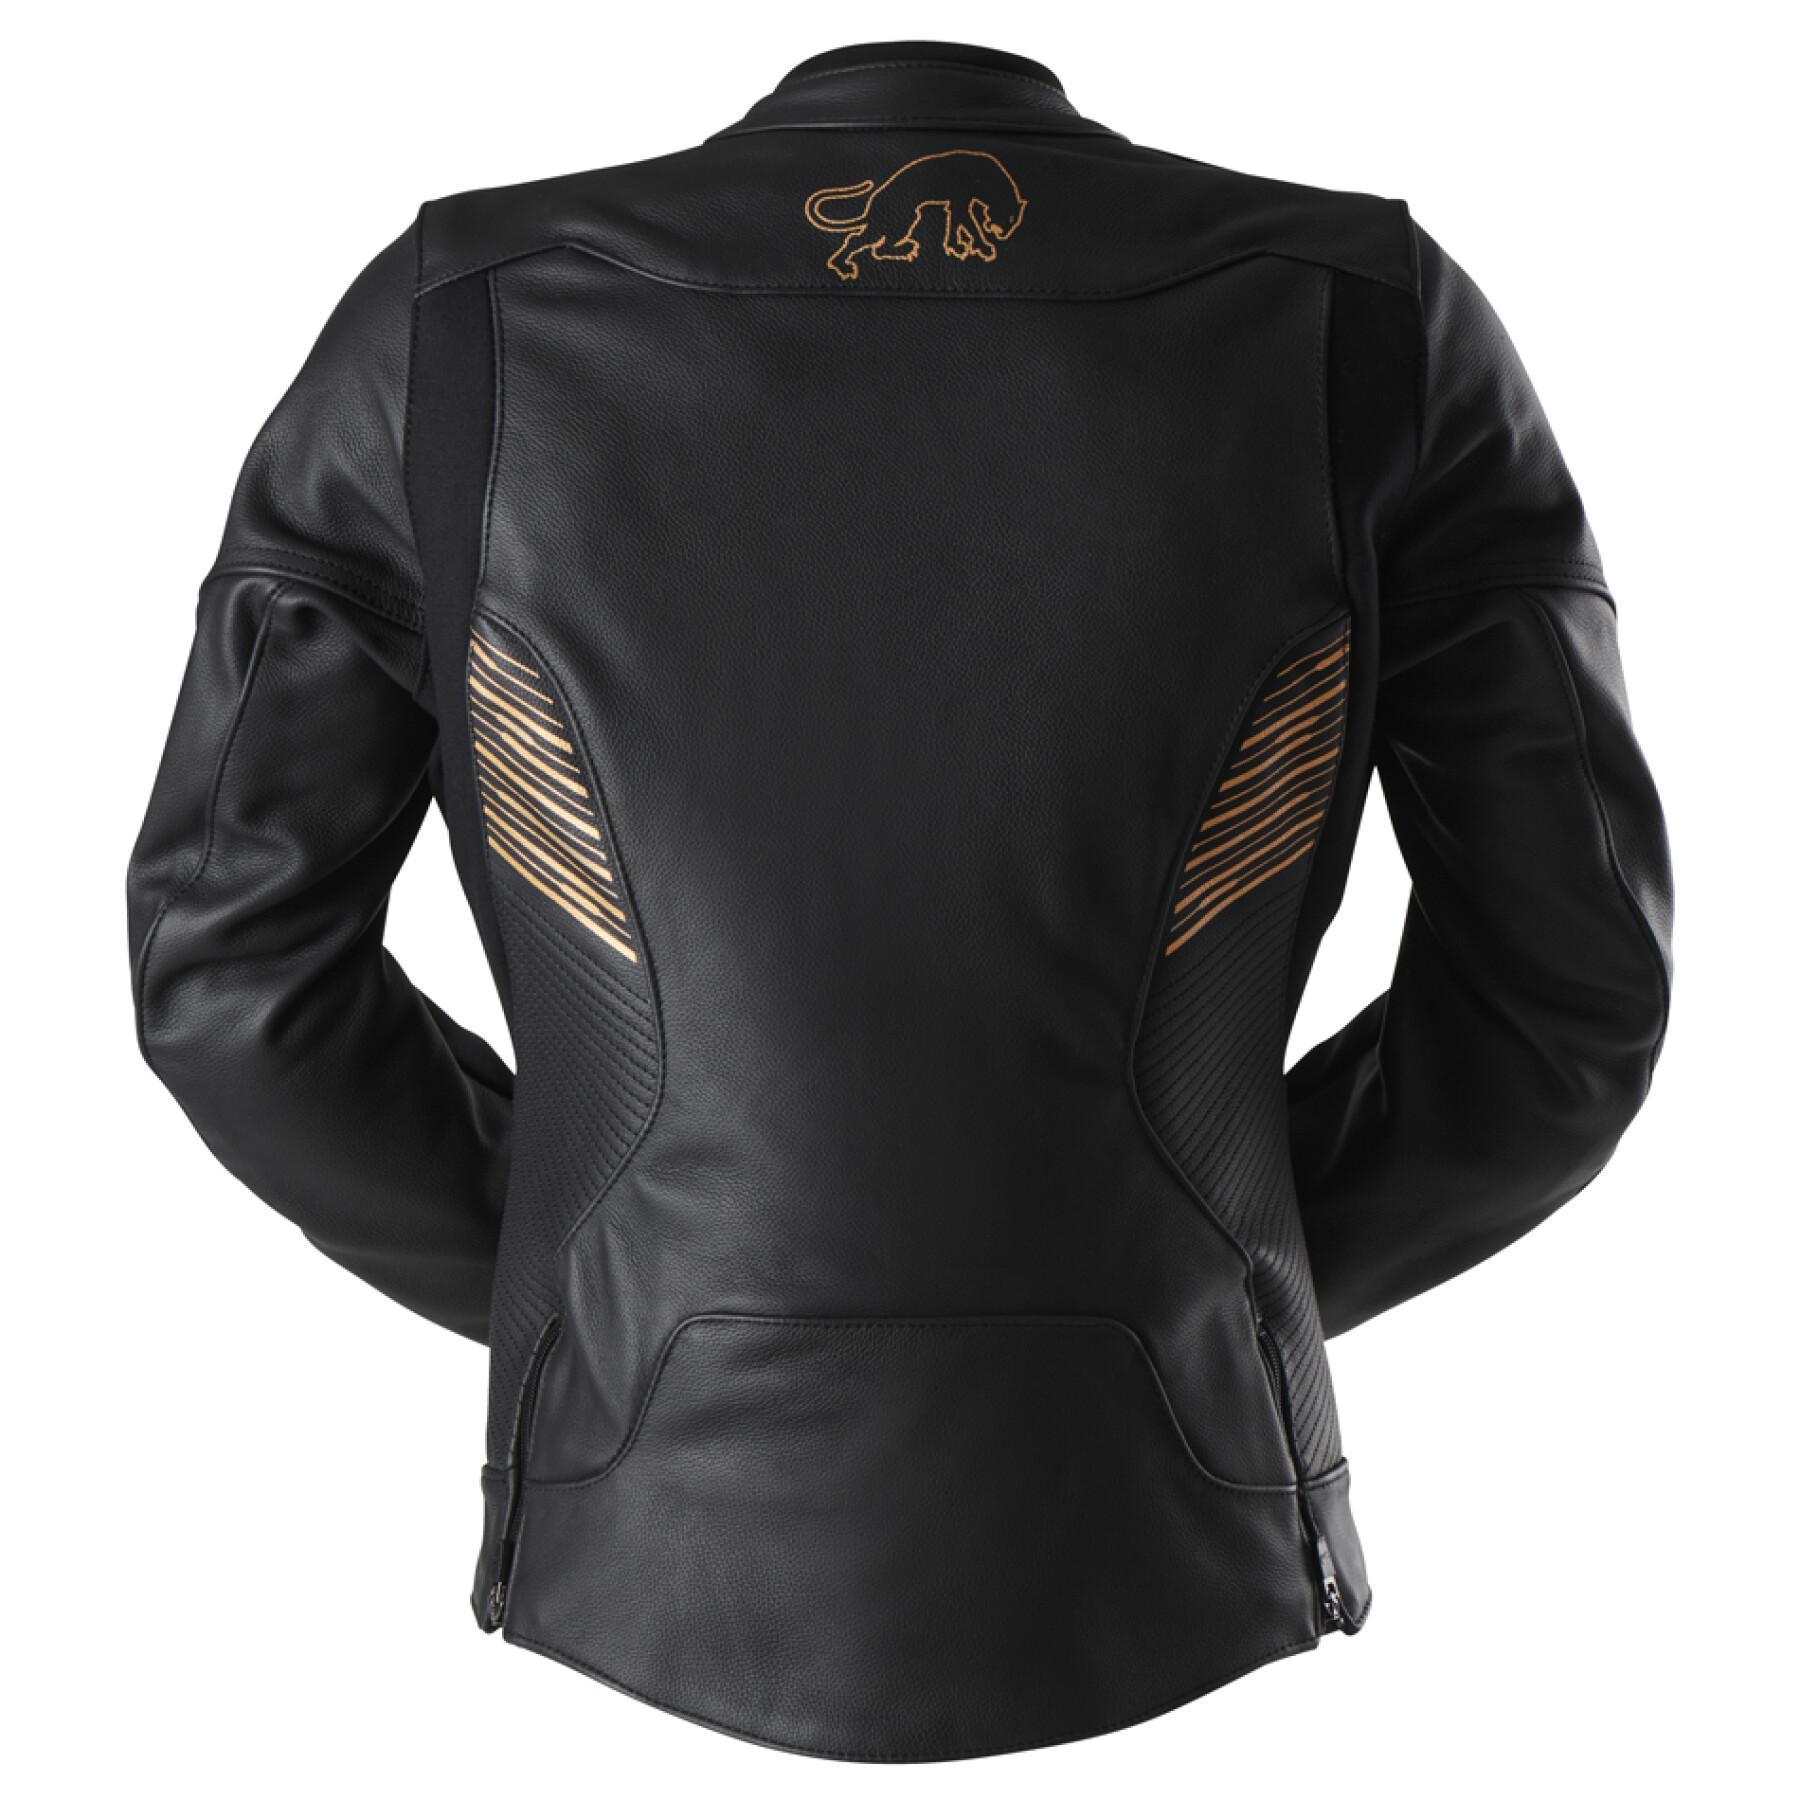 Leather motorcycle jacket for women Furygan Alba